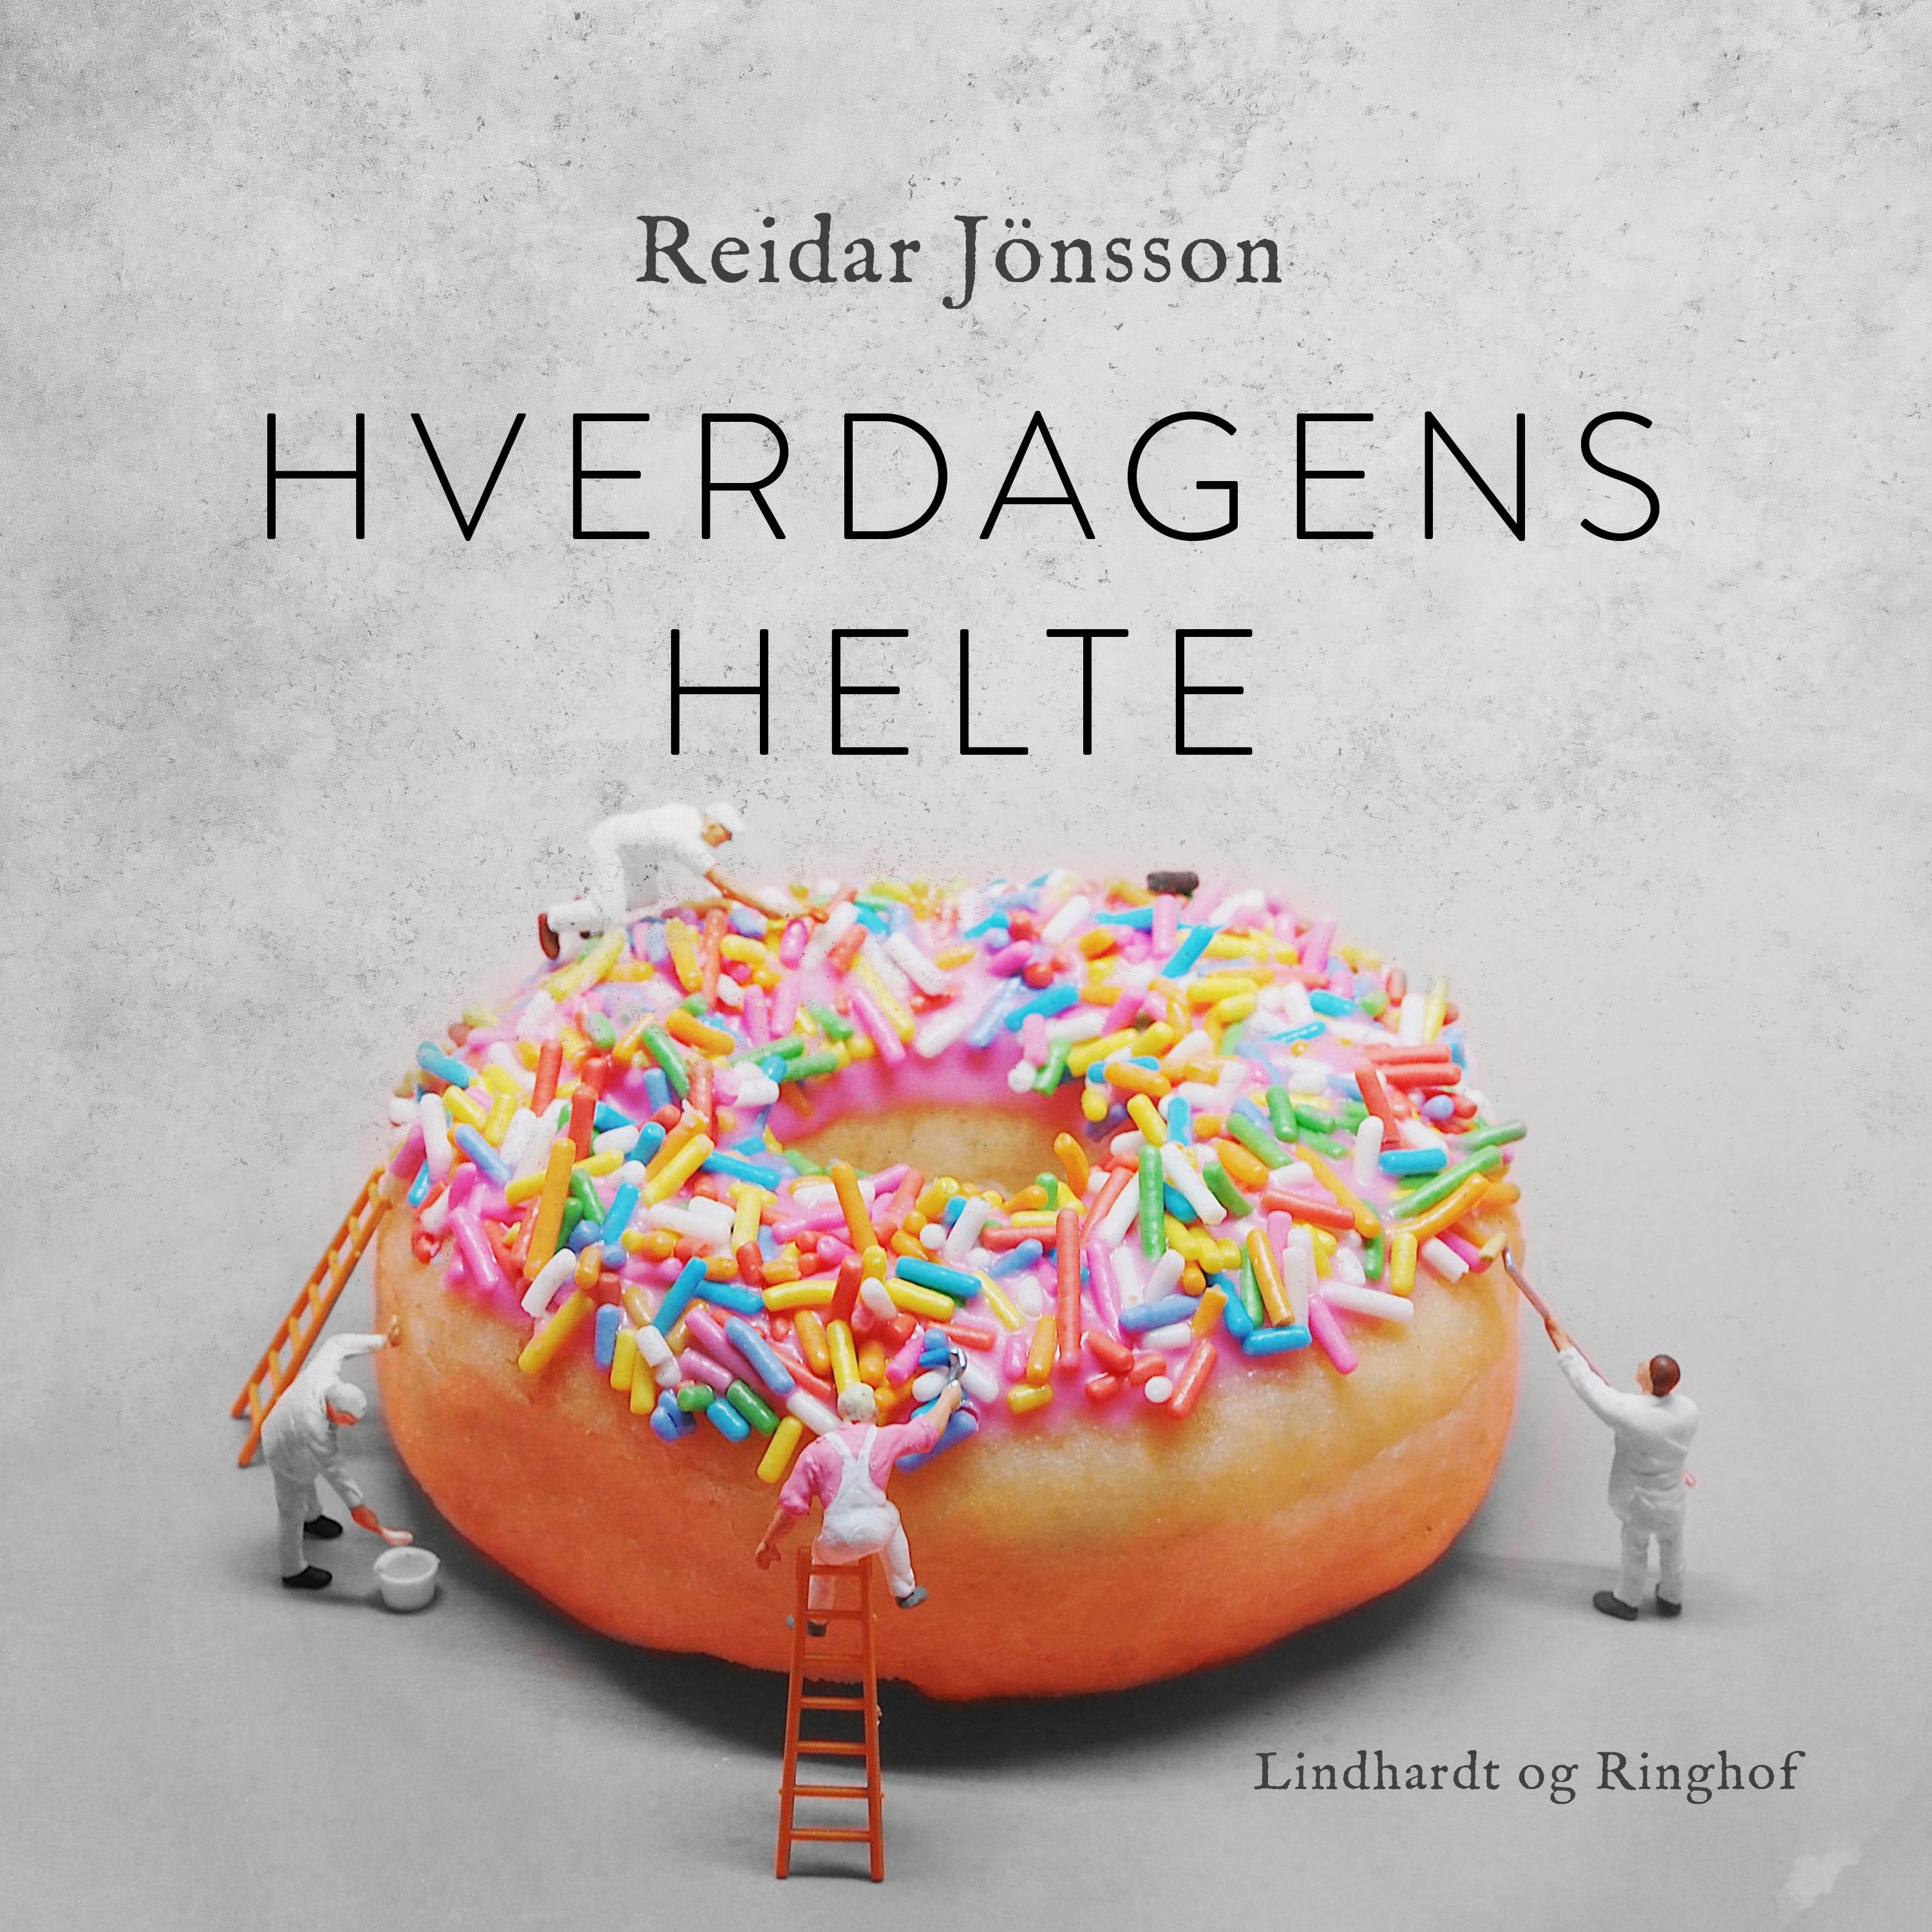 Hverdagens helte, ljudbok av Reidar Jönsson